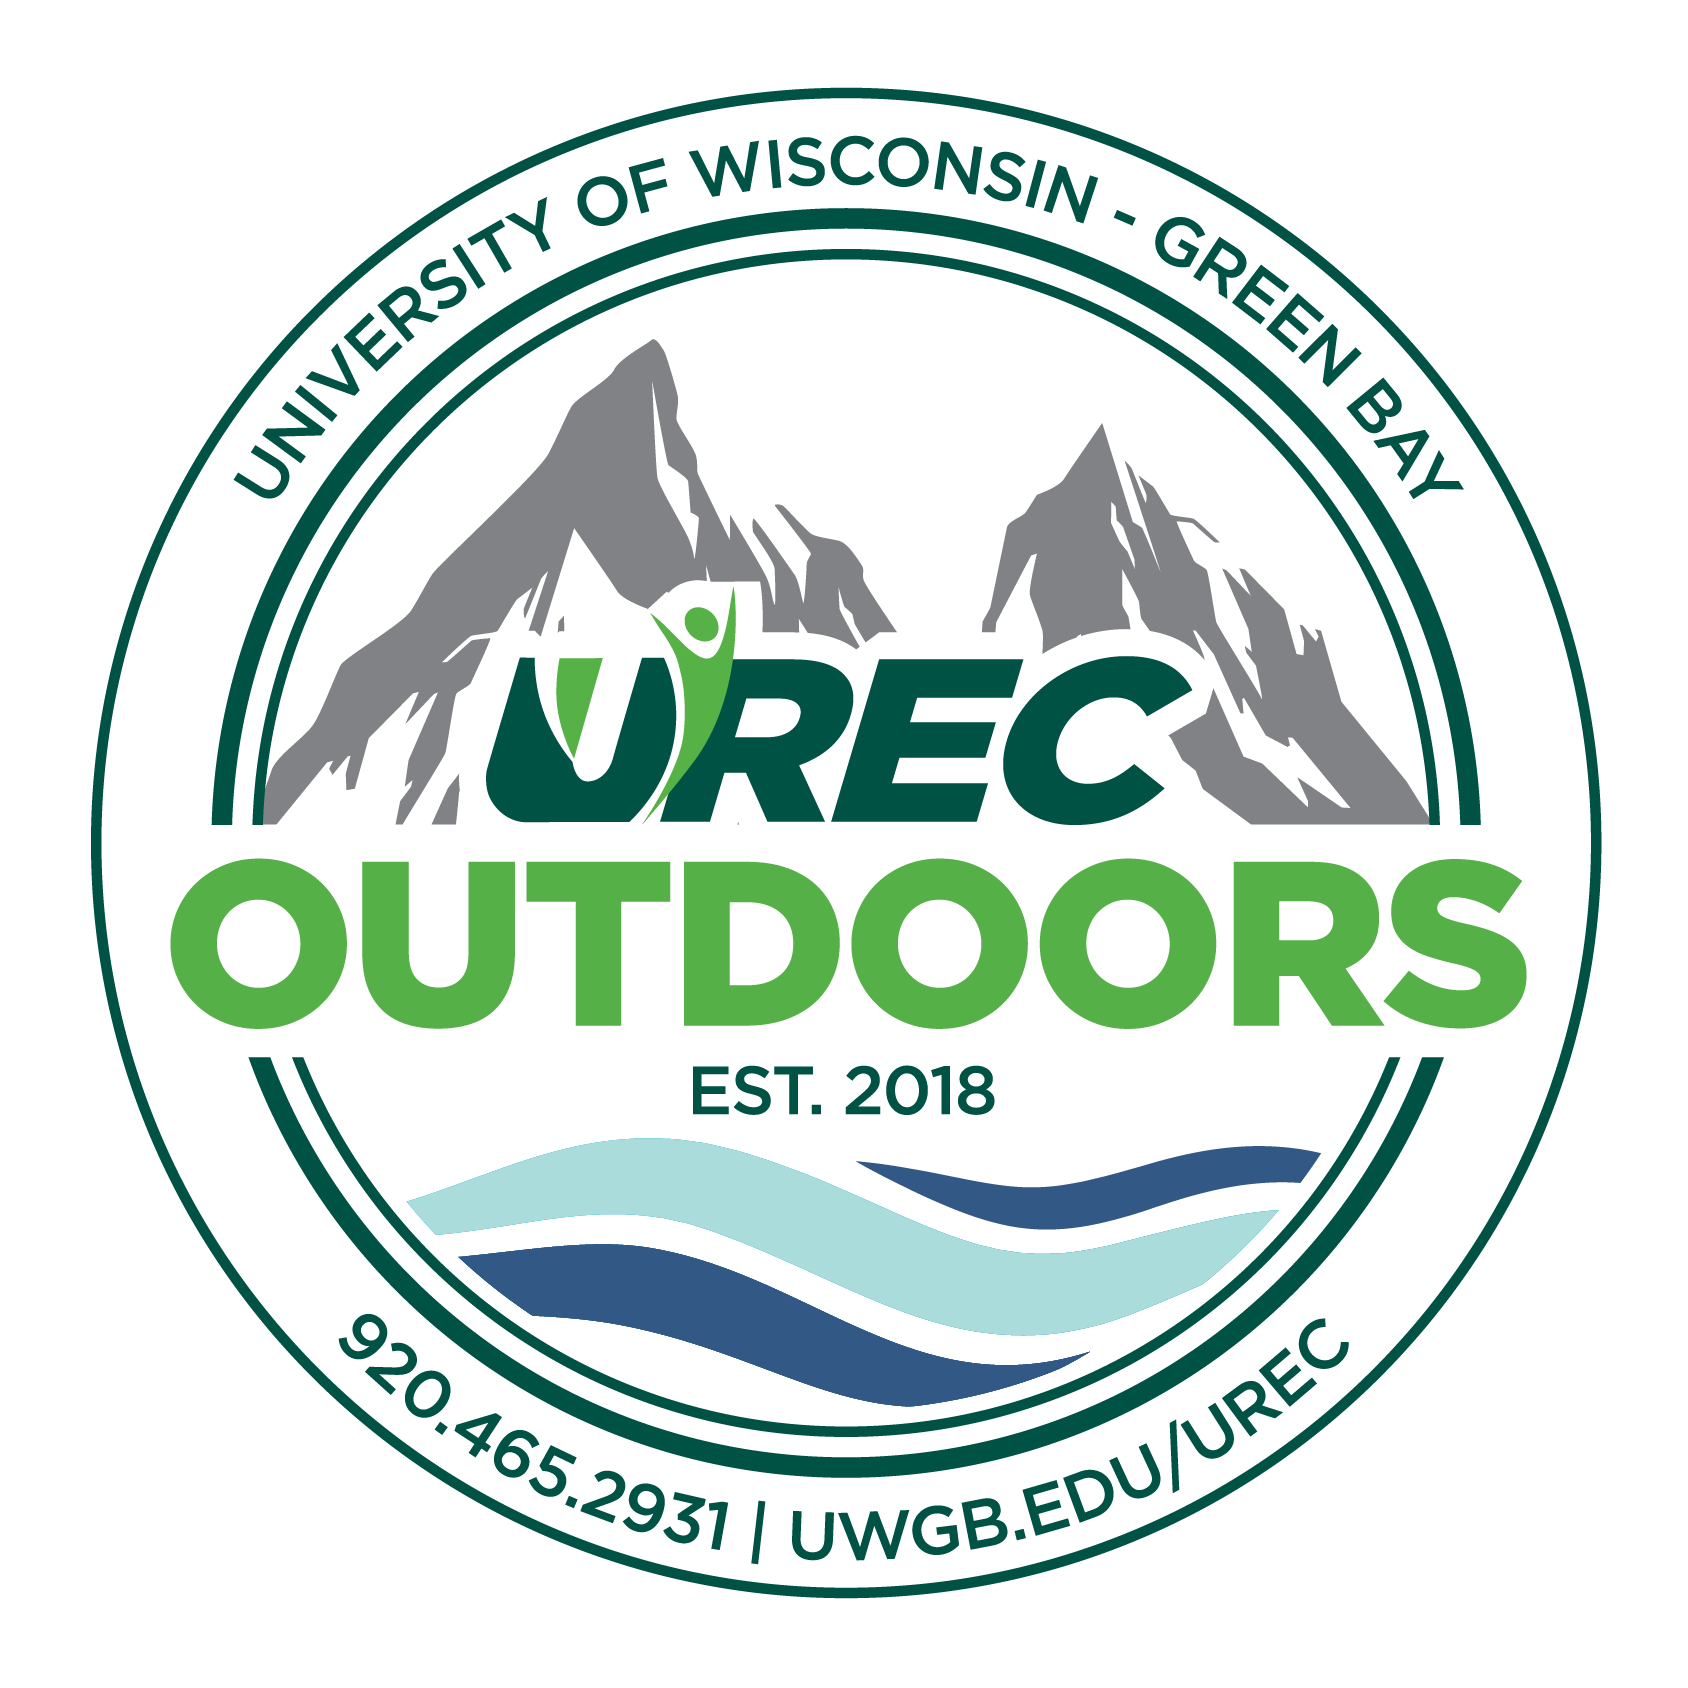 University of Wisconsin - Green Bay | UREC OUTDOORS | 920.465.2931 | UWGB.EDU/UREC